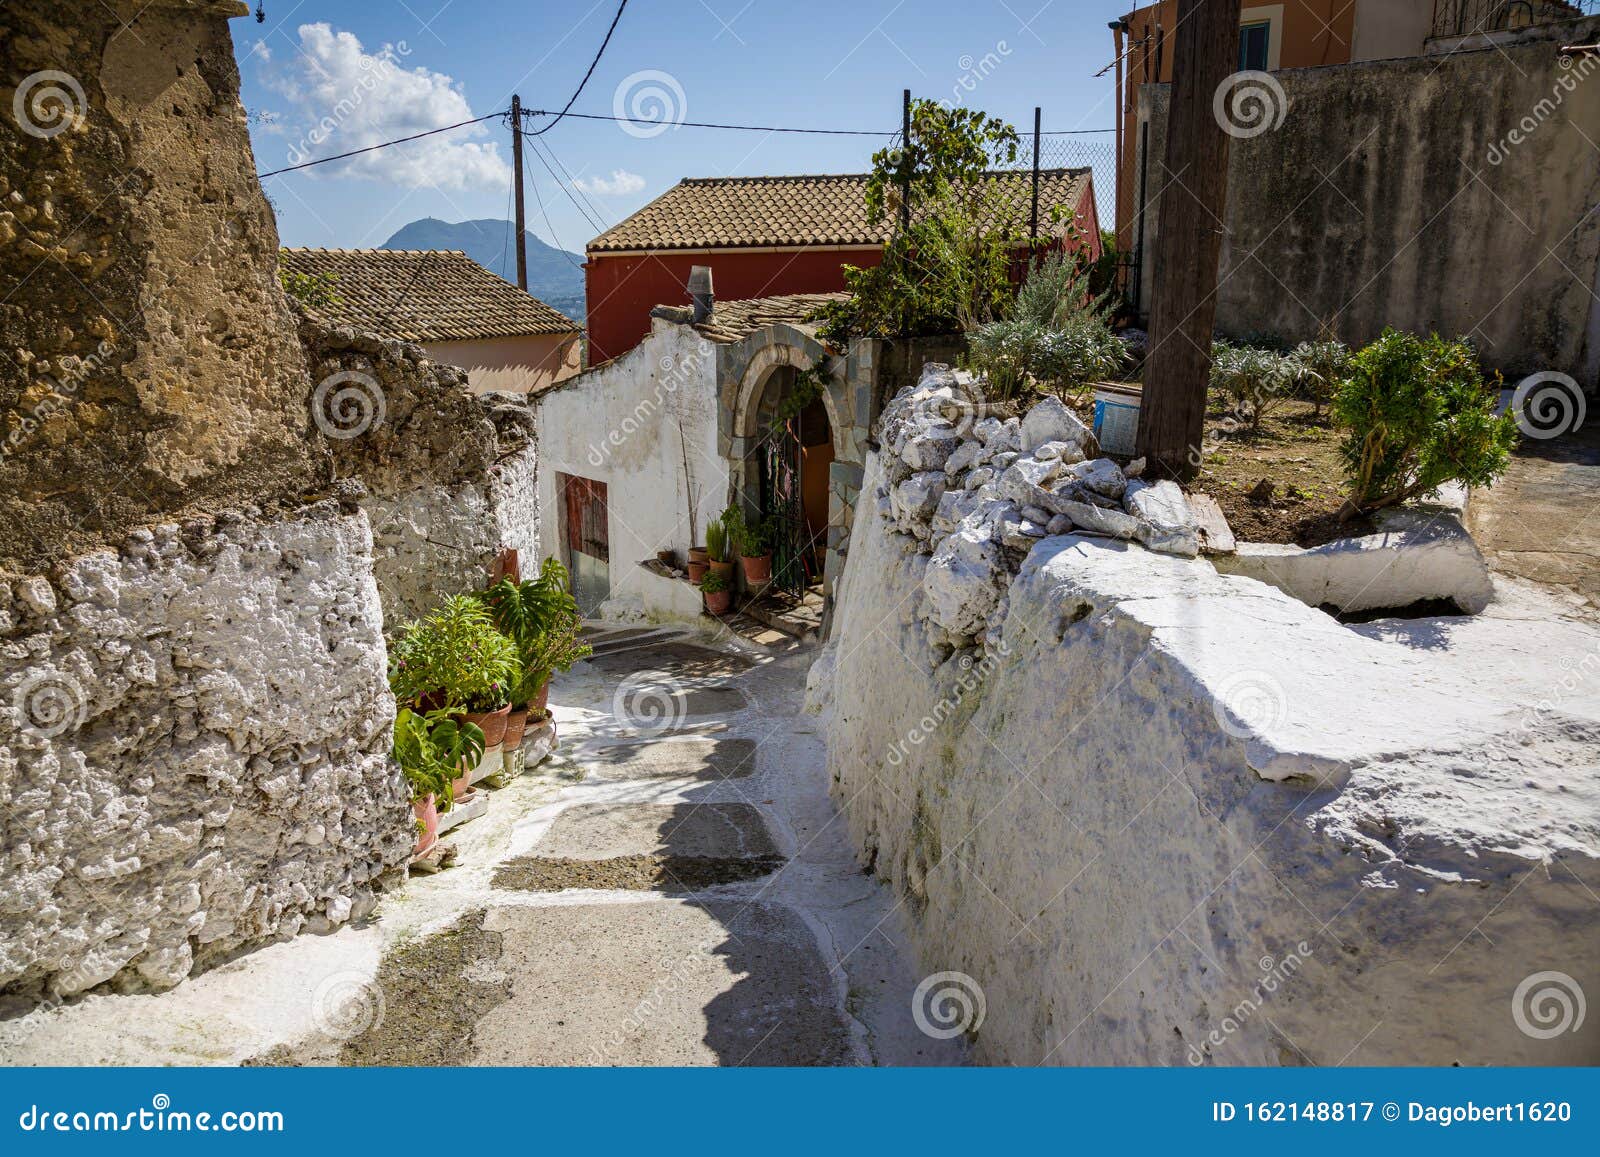 In the Streets of Pelekas Village on Corfu Island Stock Image - Image ...